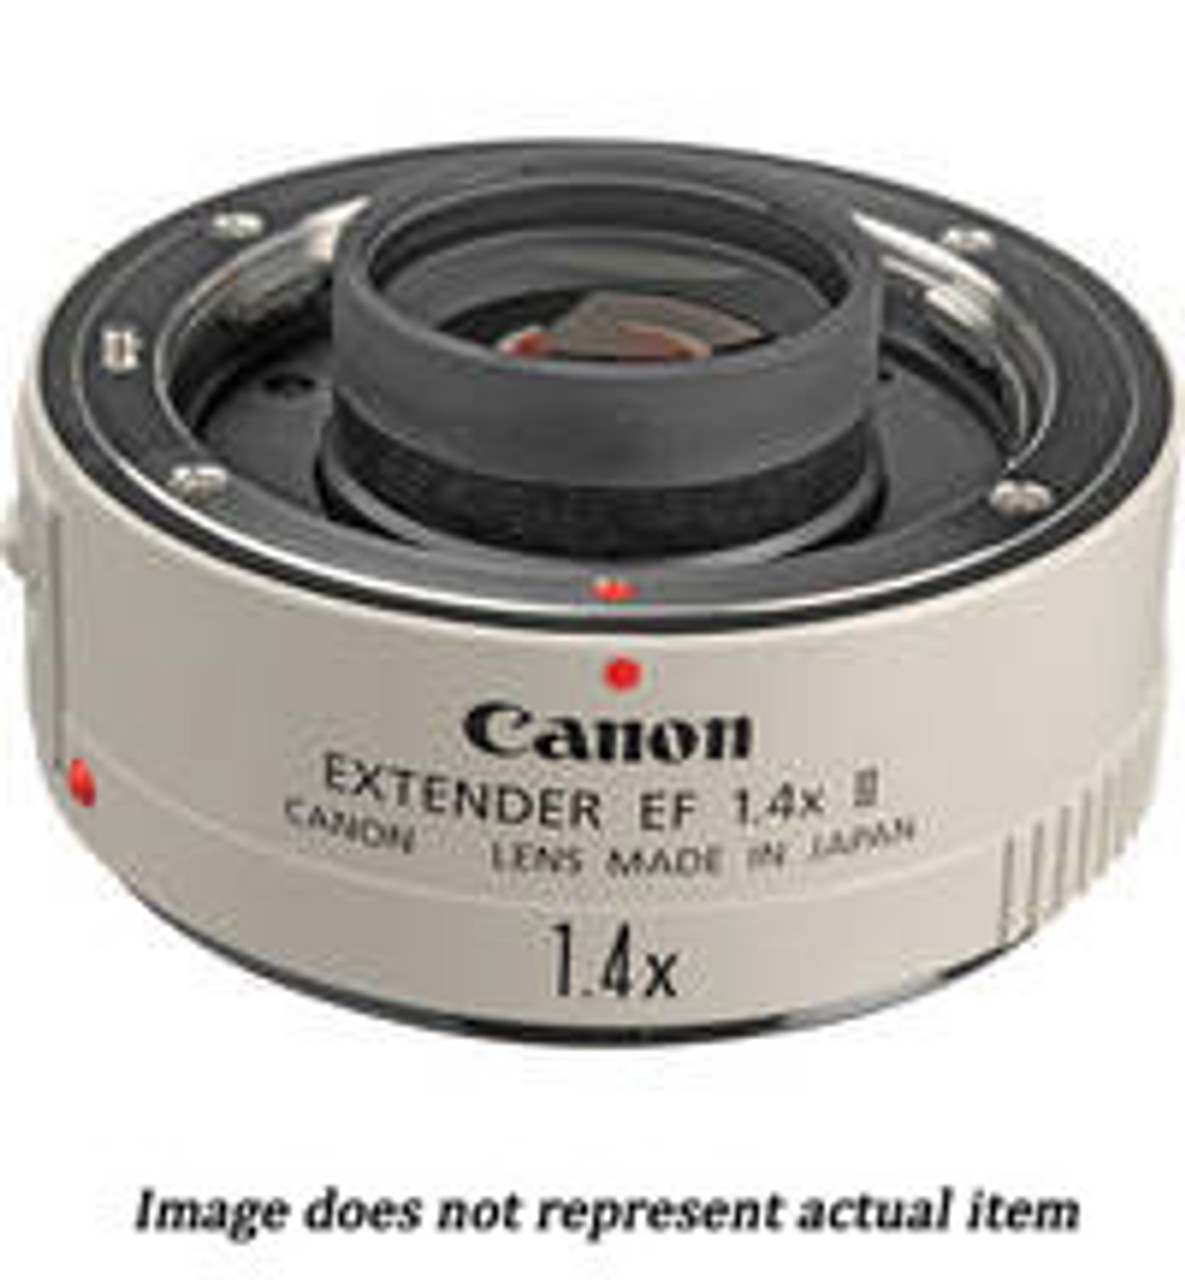 Canon EF 1.4x Extender II (Teleconverter) (USED) - S/N 39435